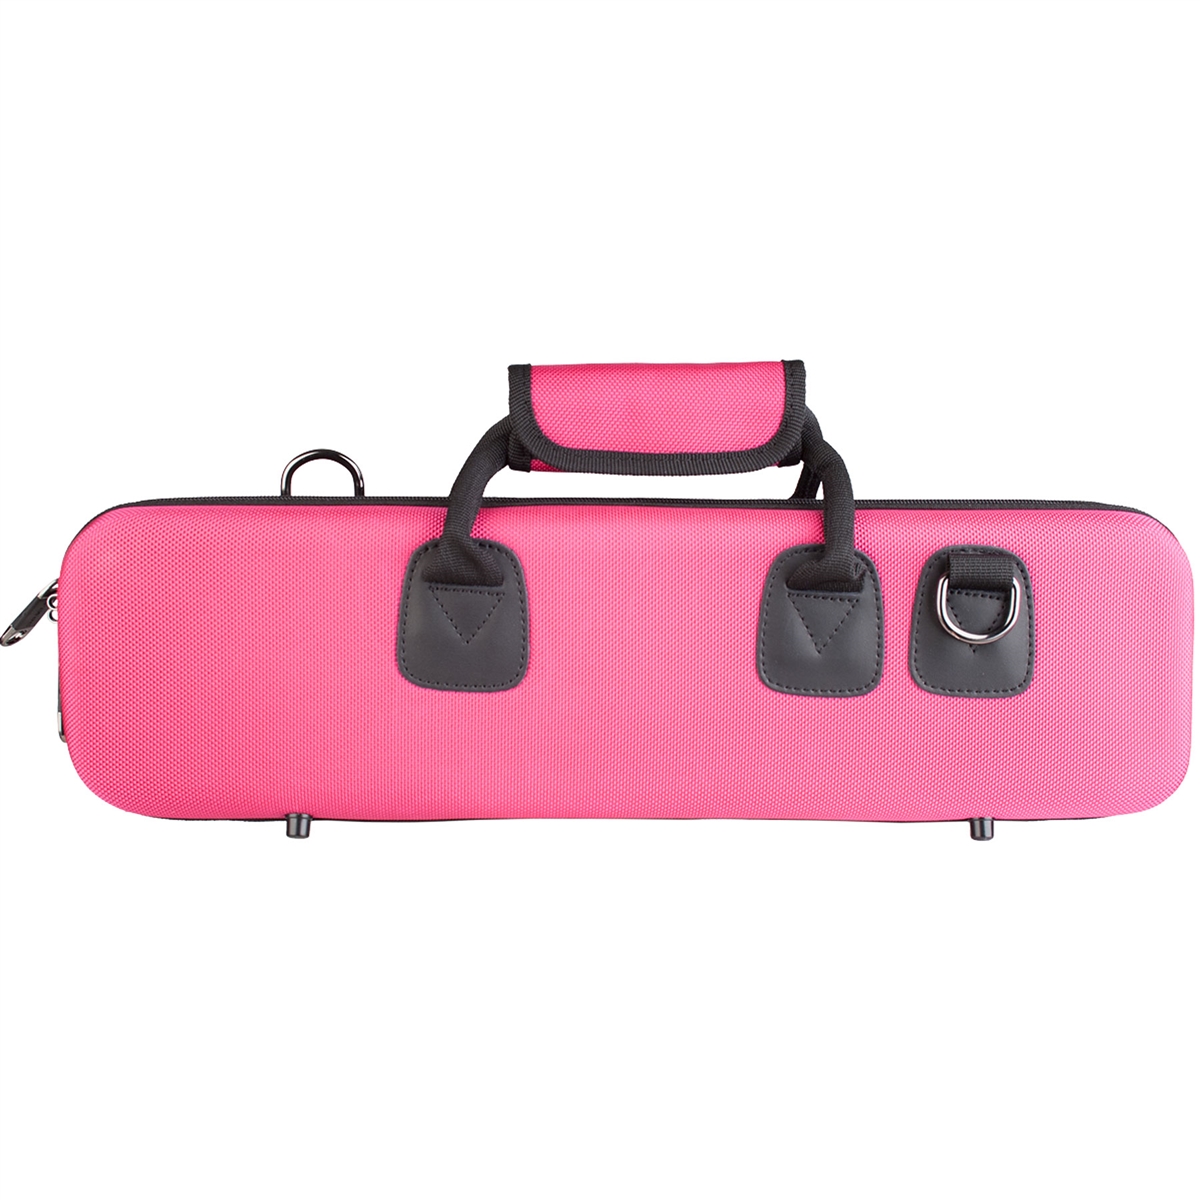 Protec Koffer - Querflöte - PB 308 - Hot Pink